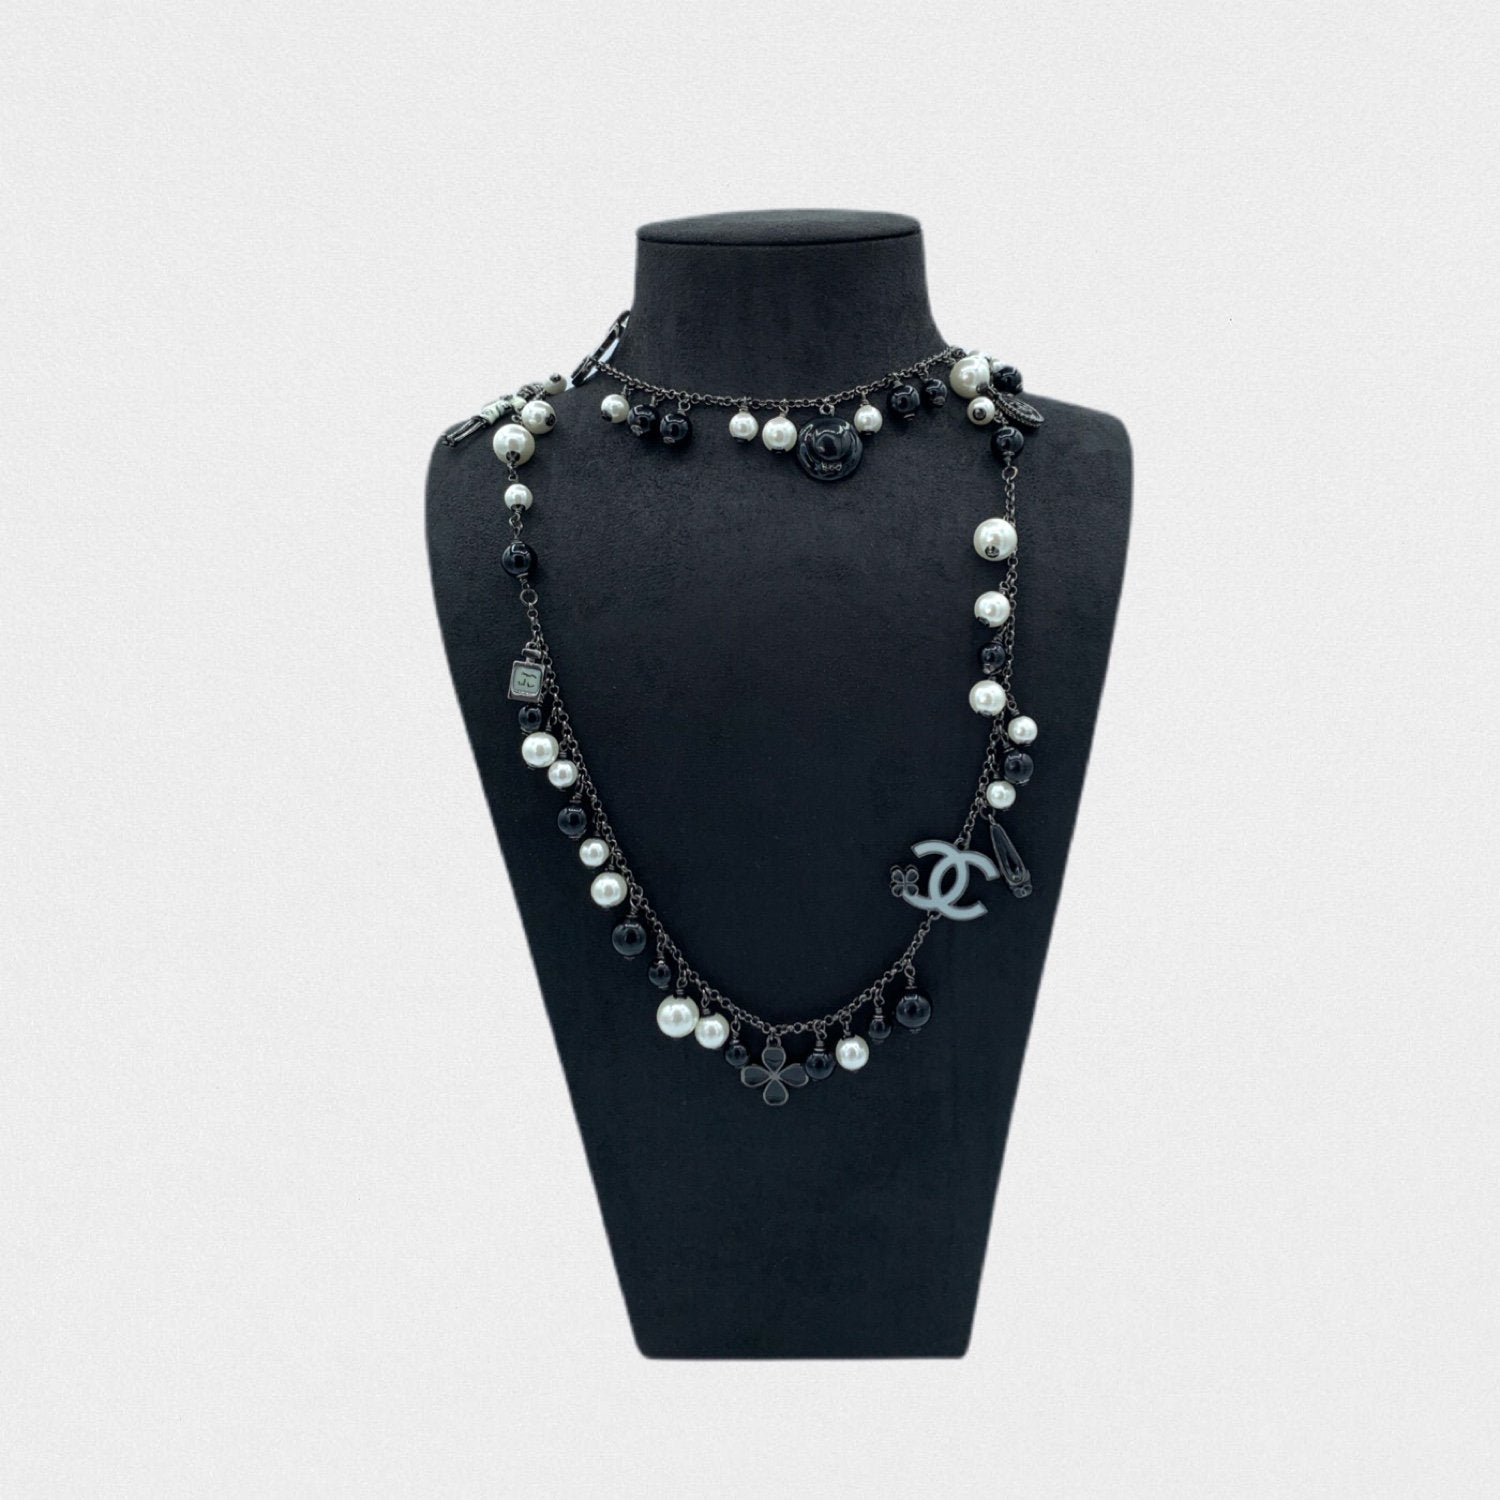 Sautoir Chanel Circa 2010 par Karl Lagerfeld second hand seconde main vintage occasion necklace